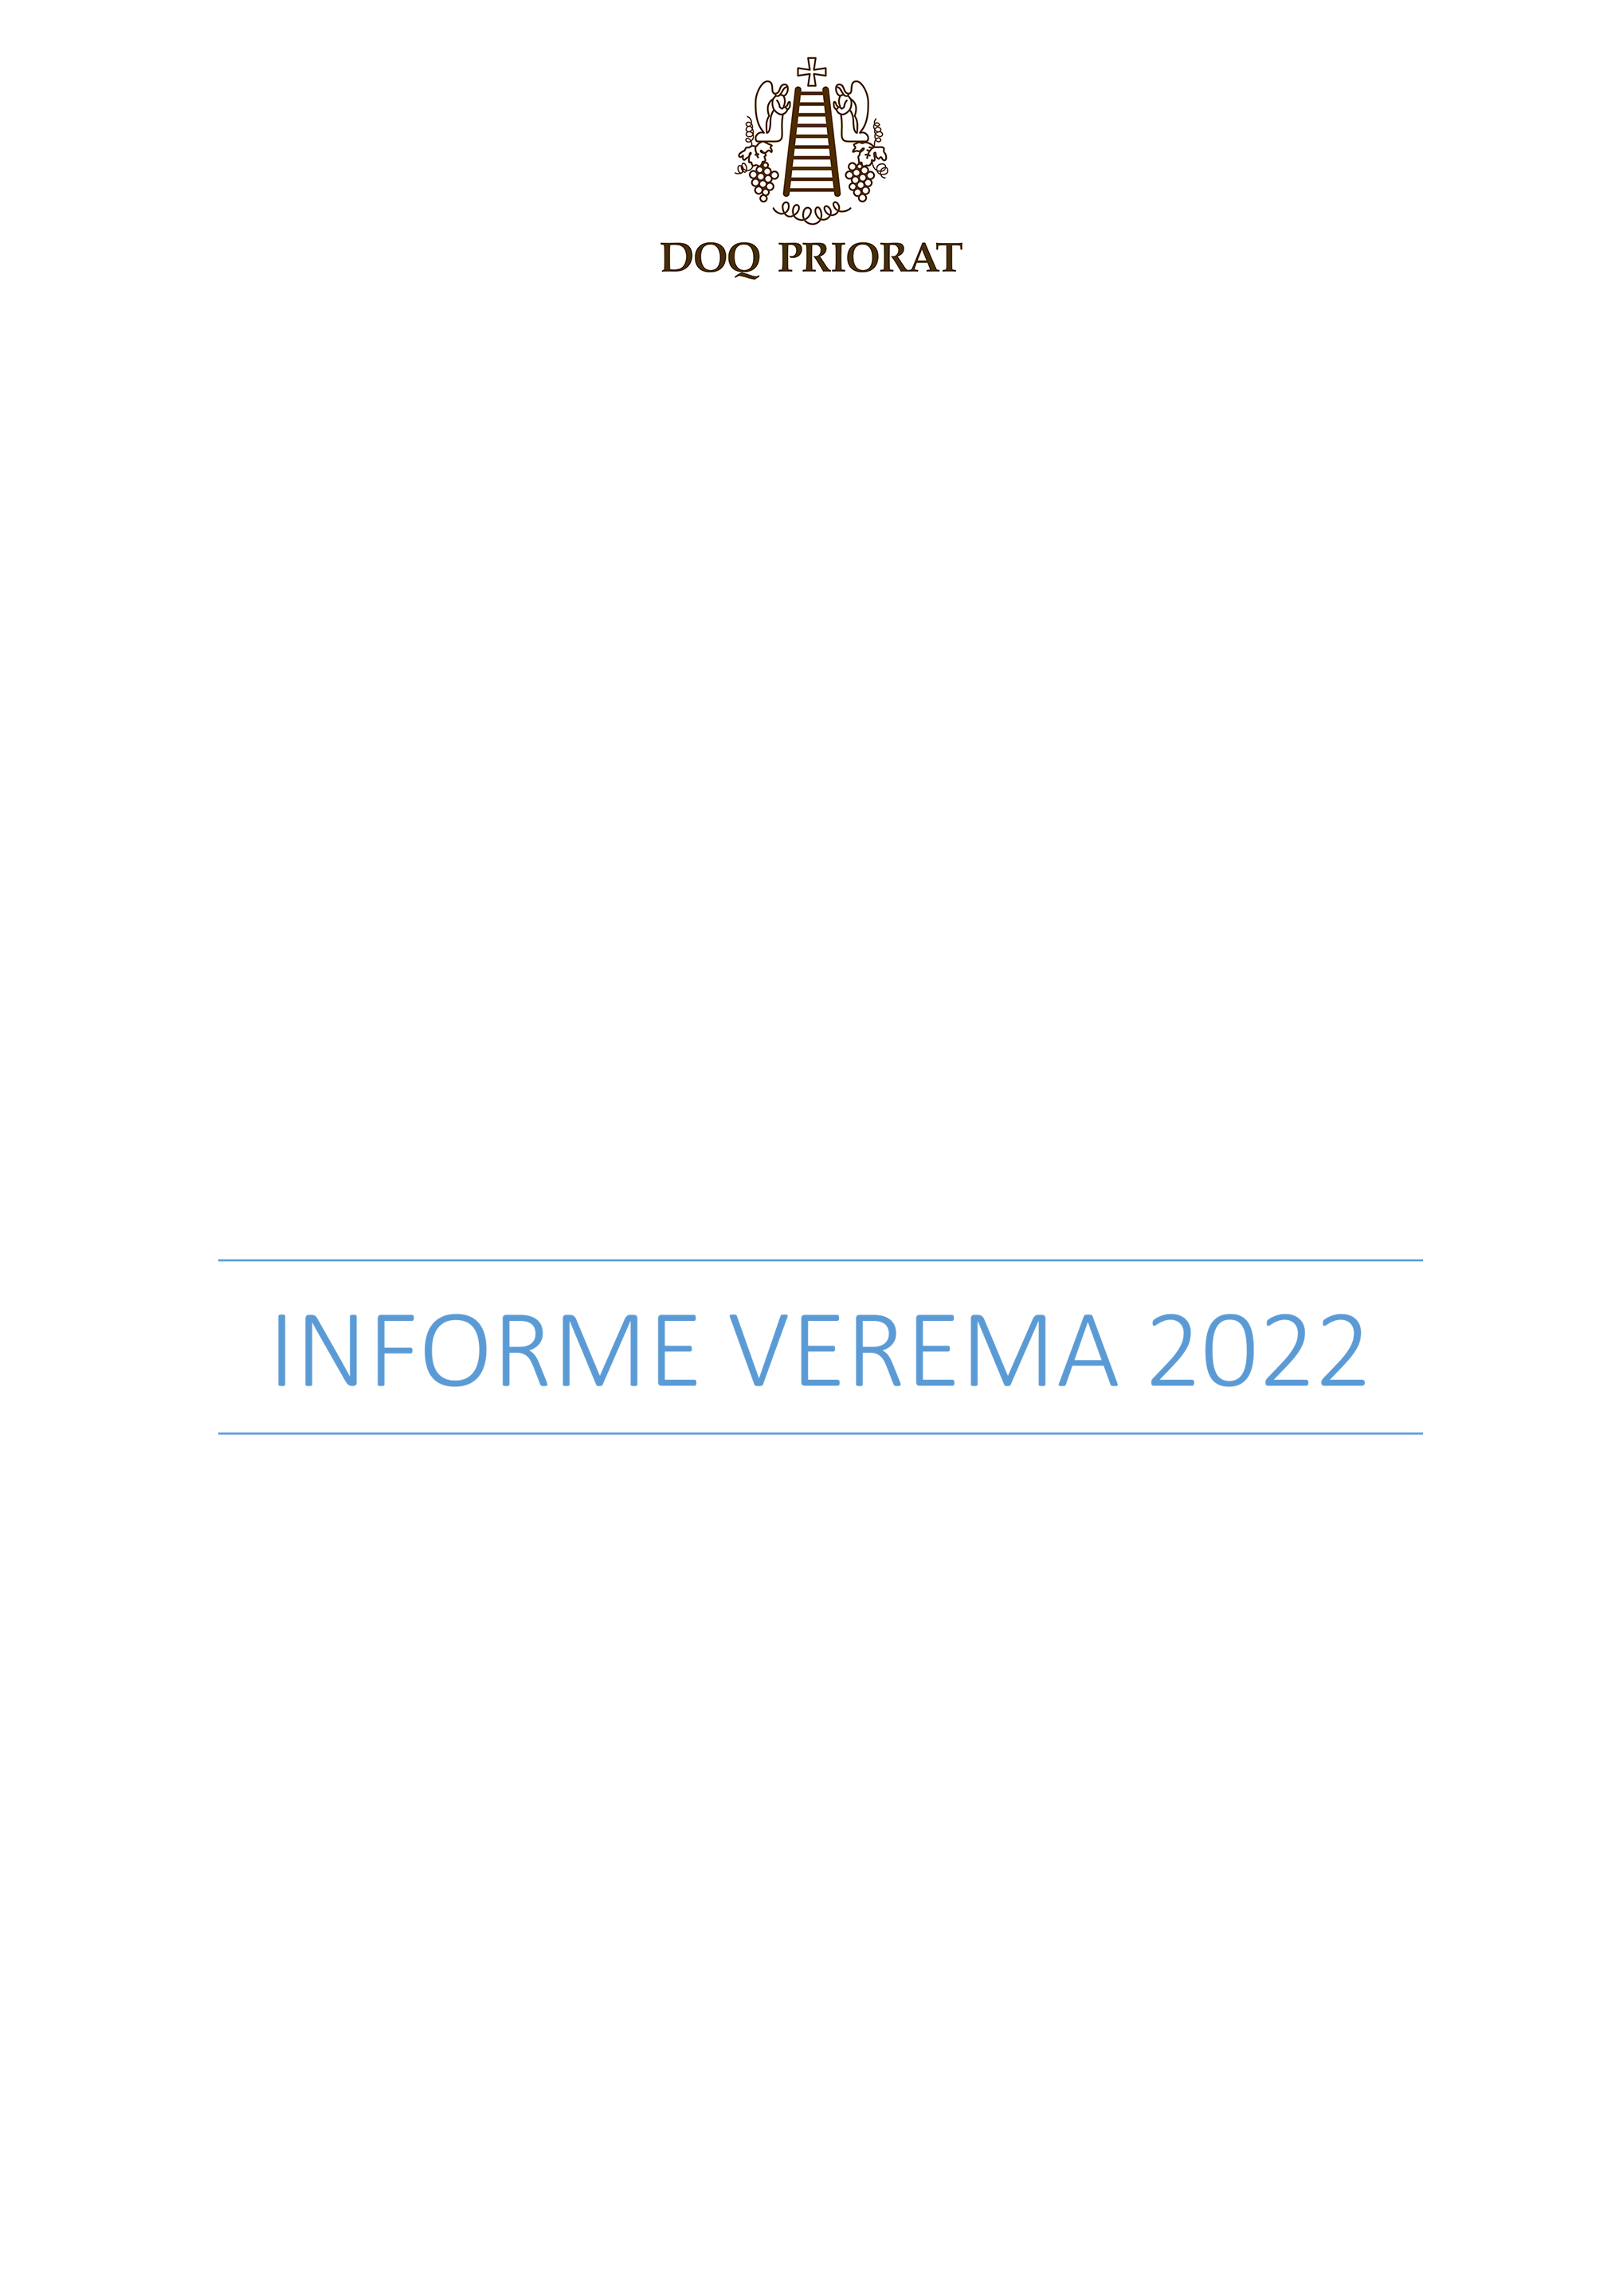 Informe de verema 2021